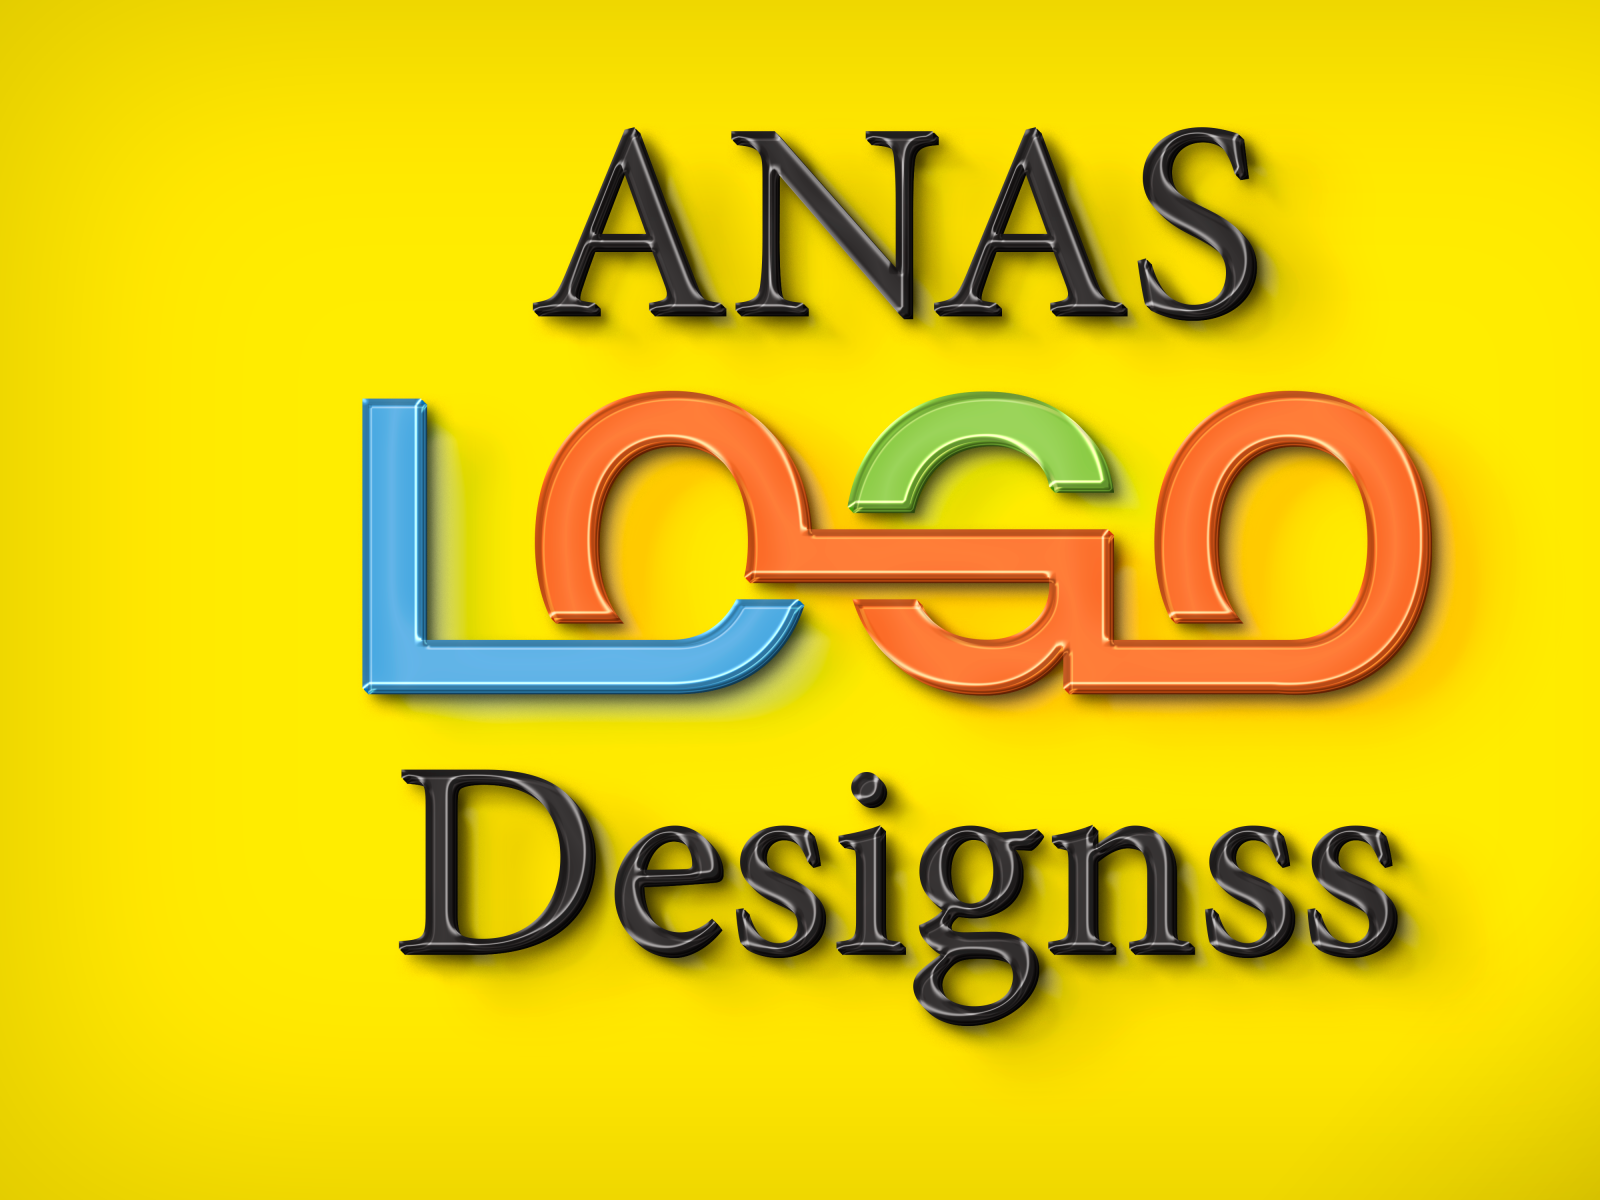 ANAS LOGO DESIGNSS by AnasKhan on Dribbble